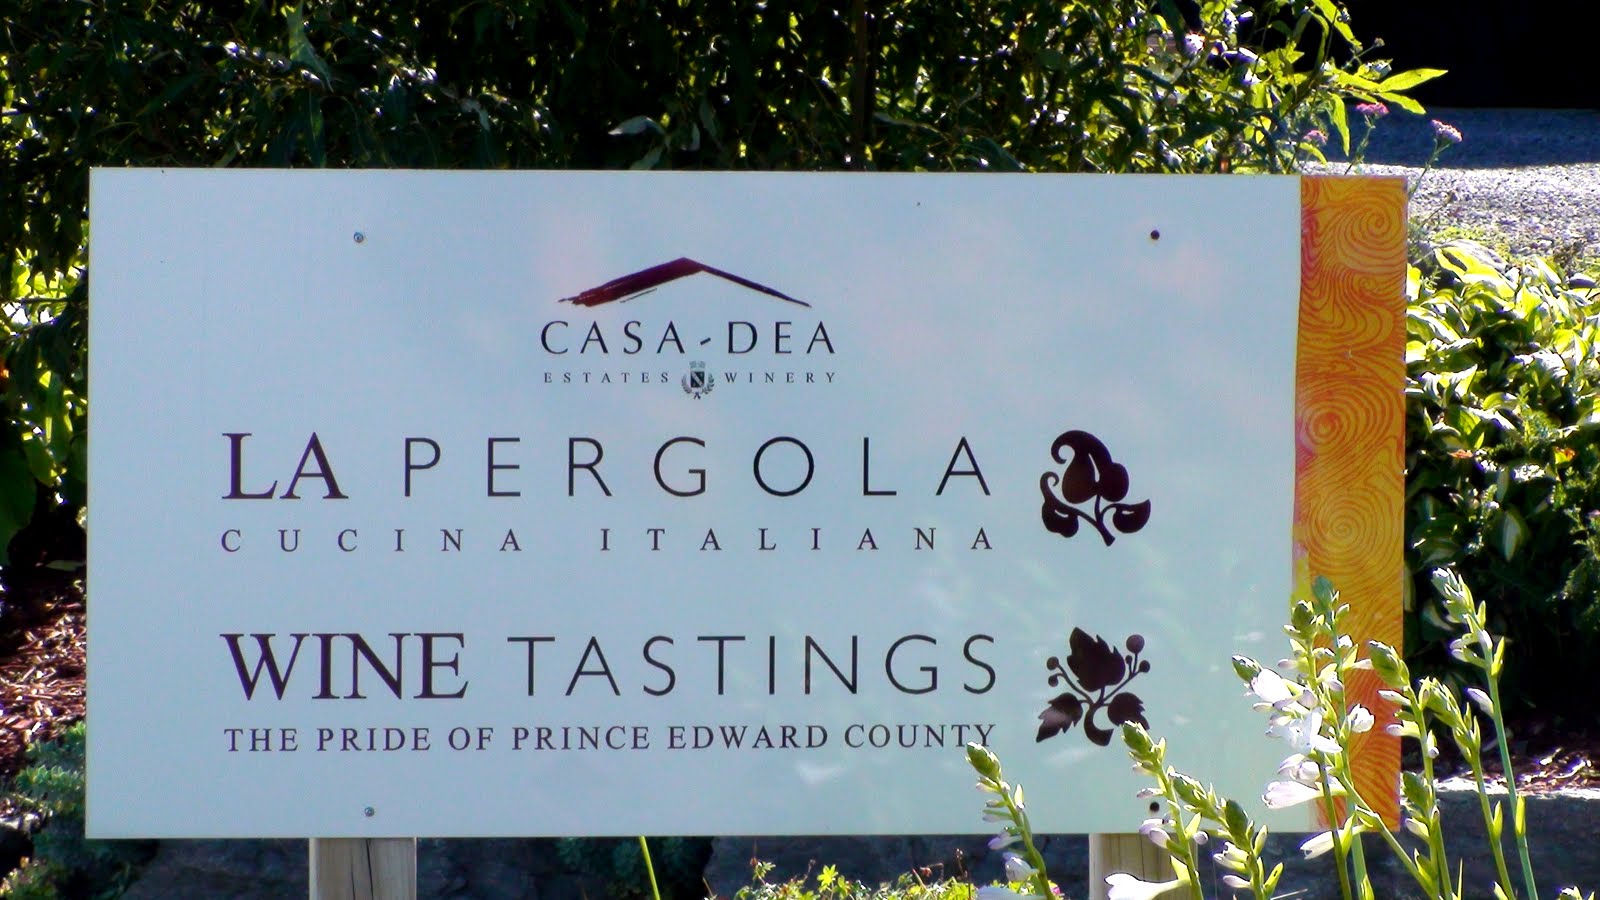 Casa-Dea winery